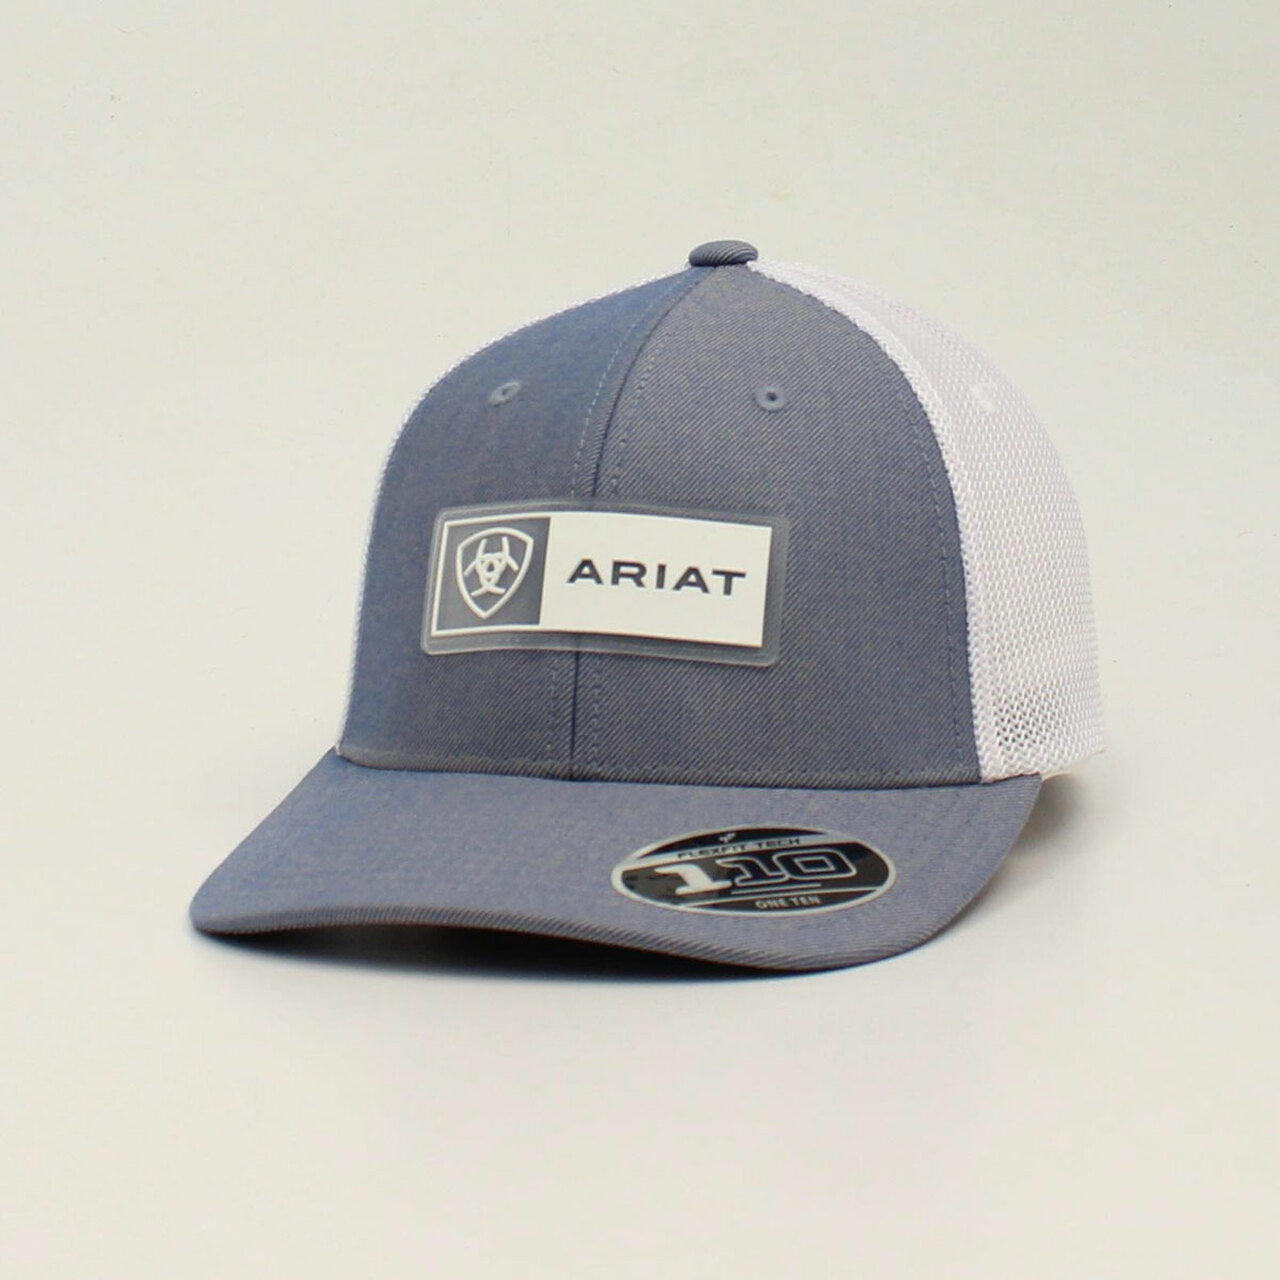 ARIAT RUBBER PATCH LIGHT BLUE - HATS CAP - A300015313